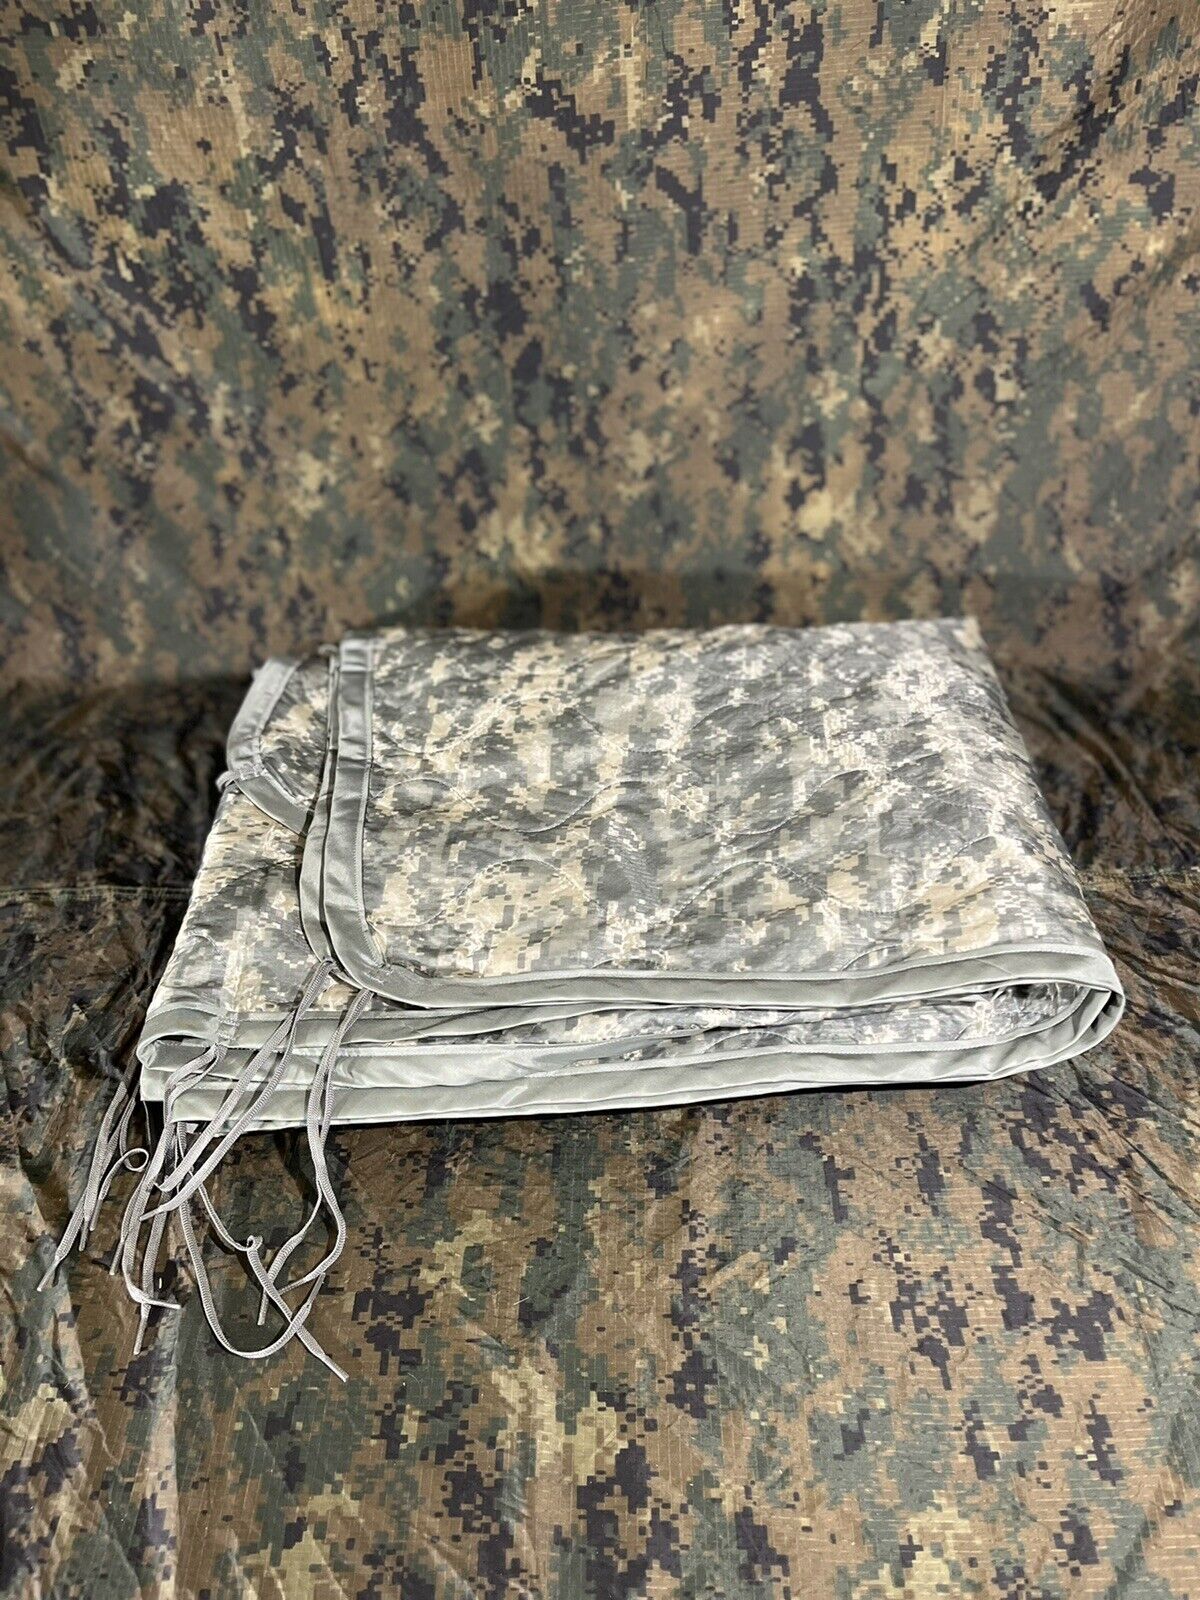 US Military Army ACU Digital Wet Weather PONCHO LINER Woobie Blanket 